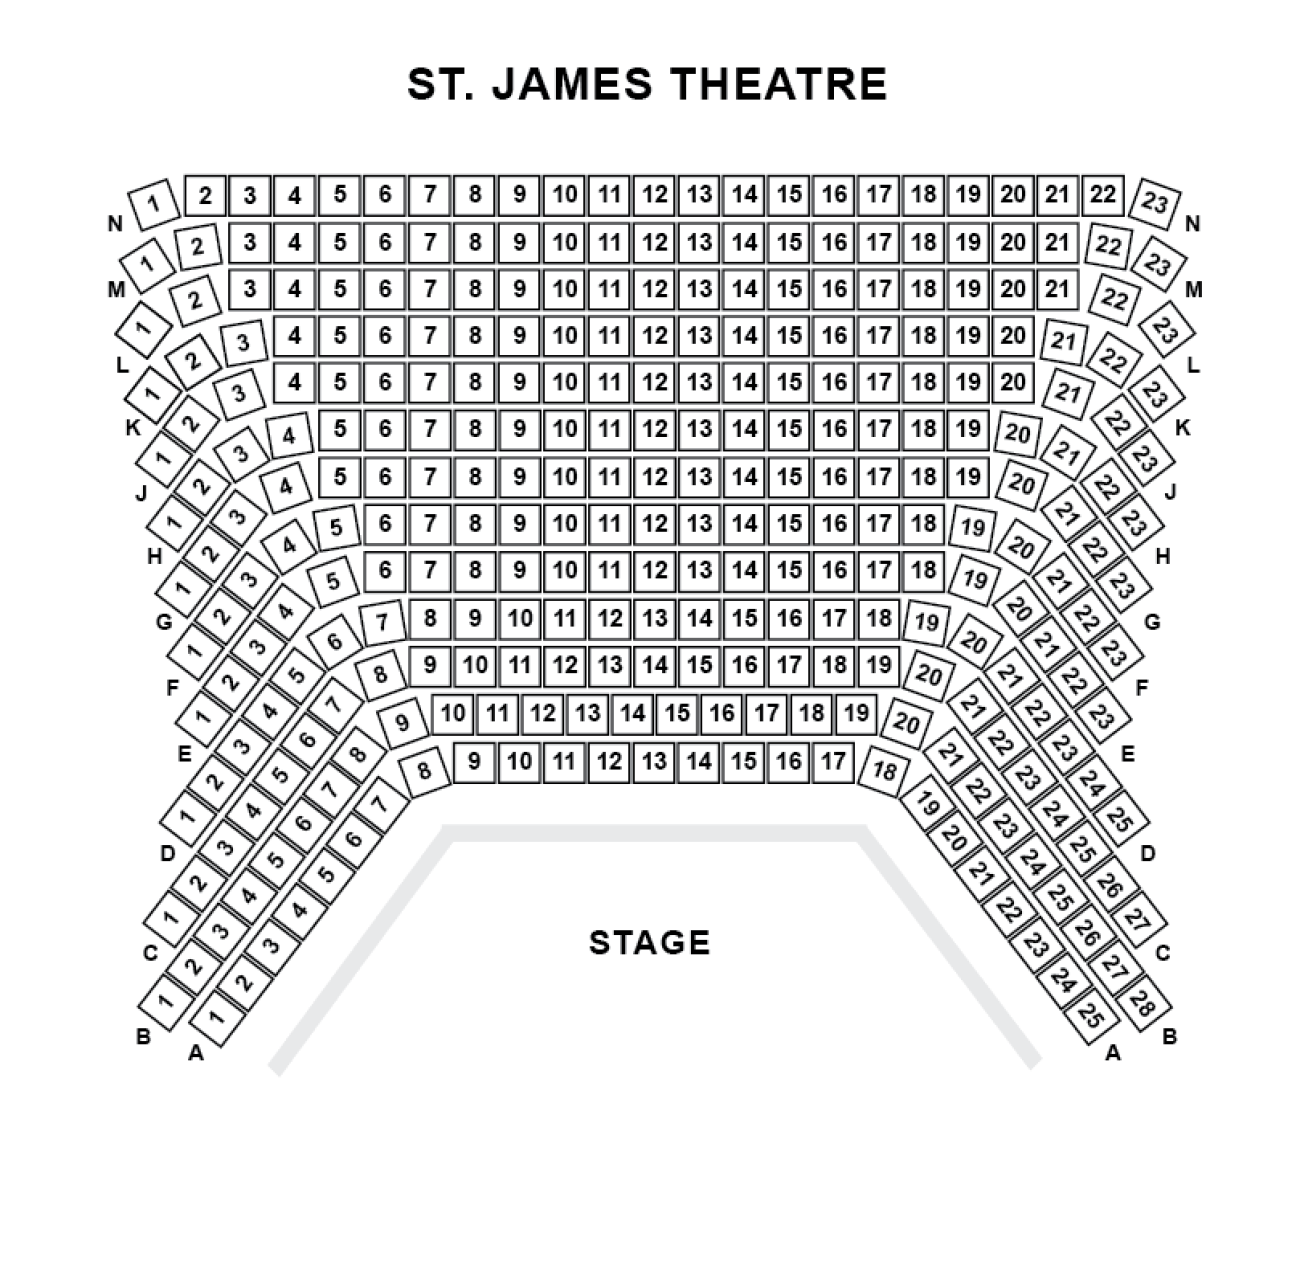 Plano de asientos de St. James Theatre